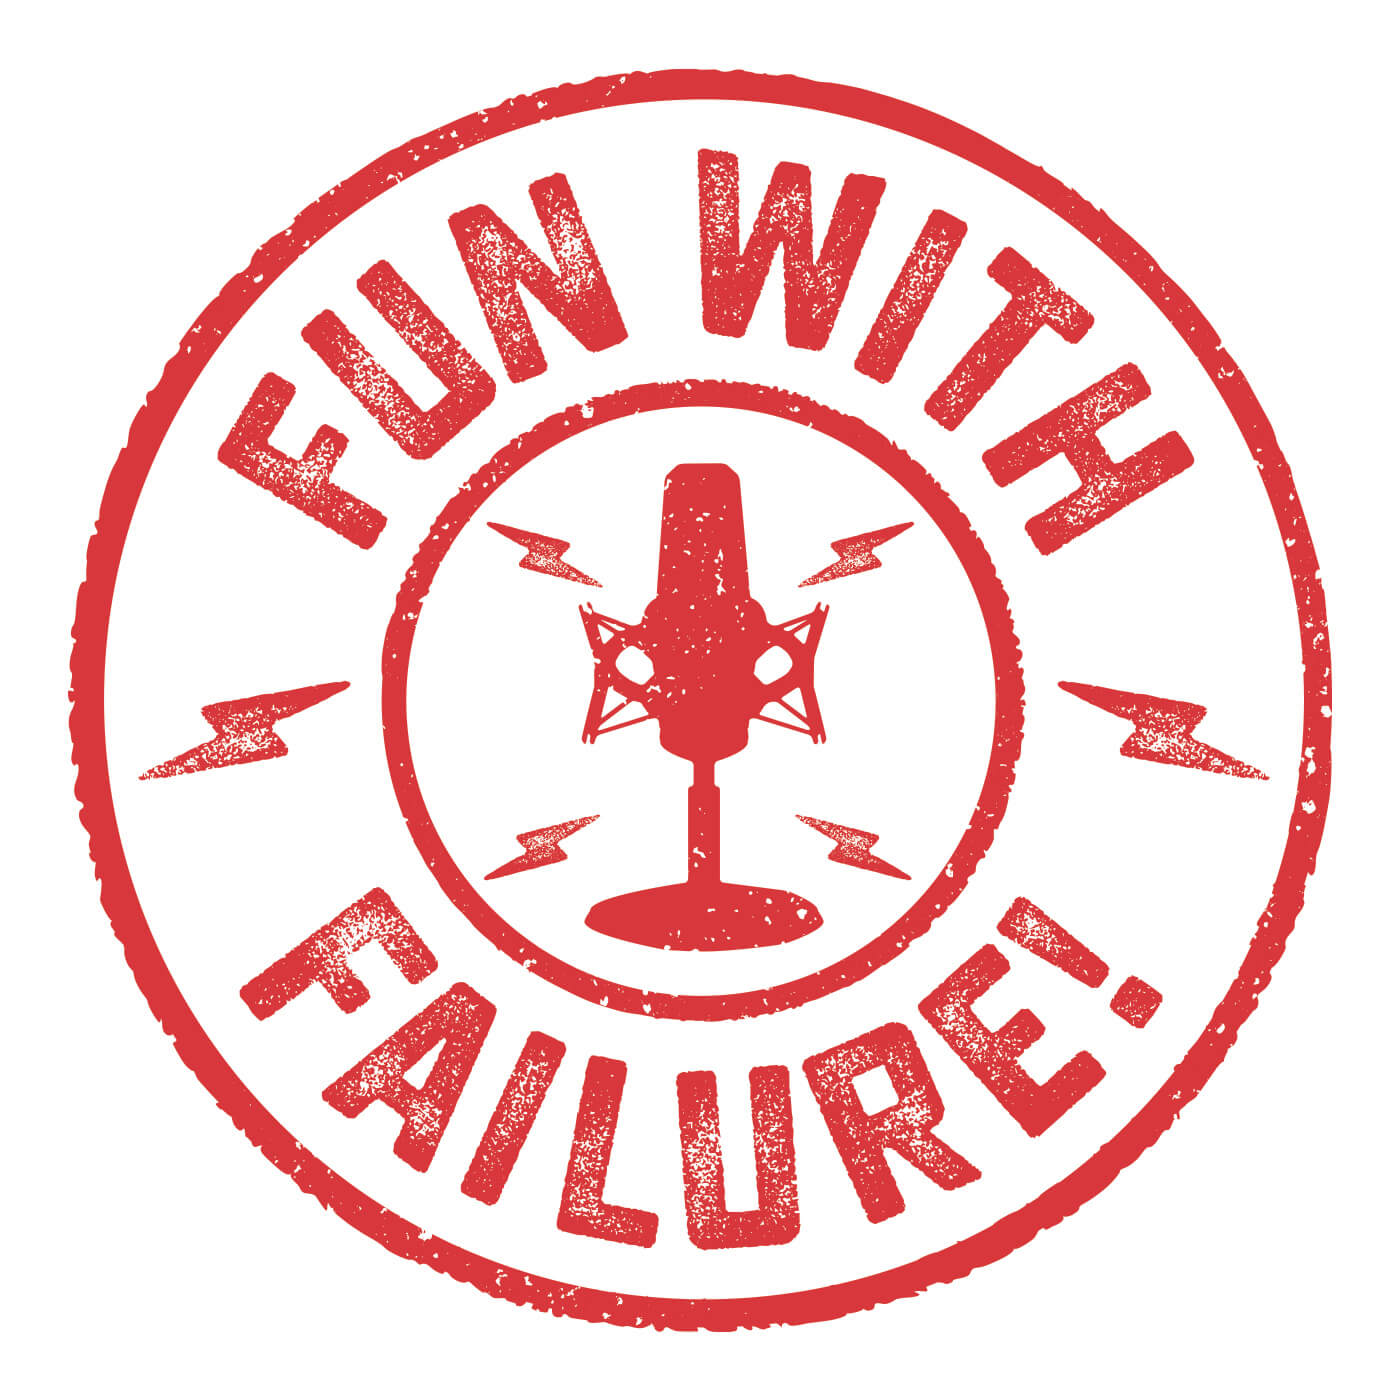 Fun with Failure